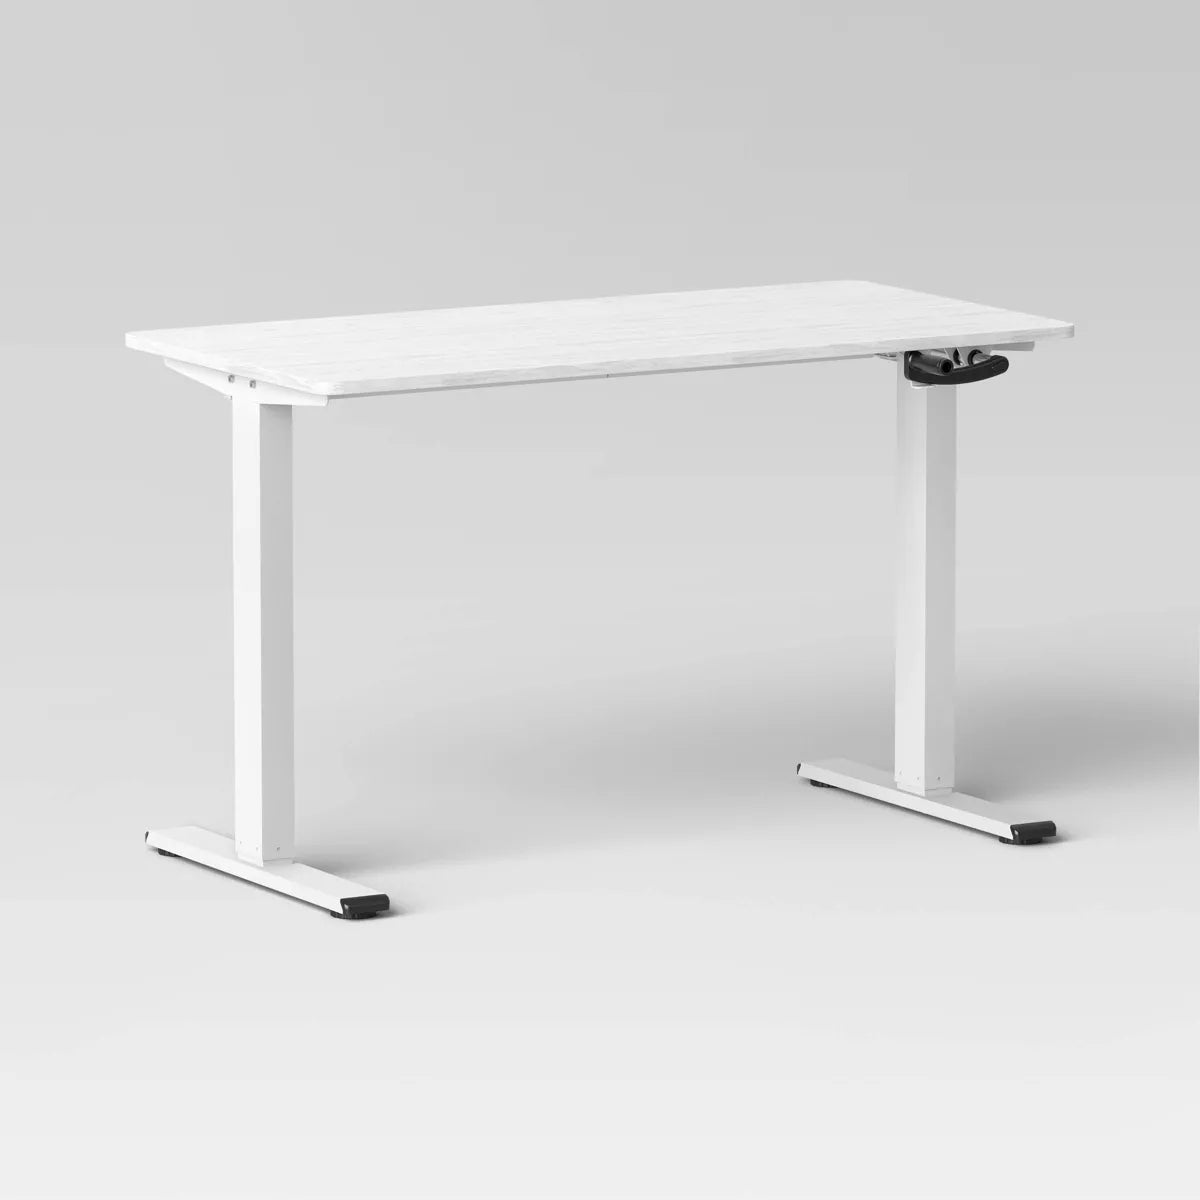 Loring Manual Height Adjustable Standing Desk White - Threshold